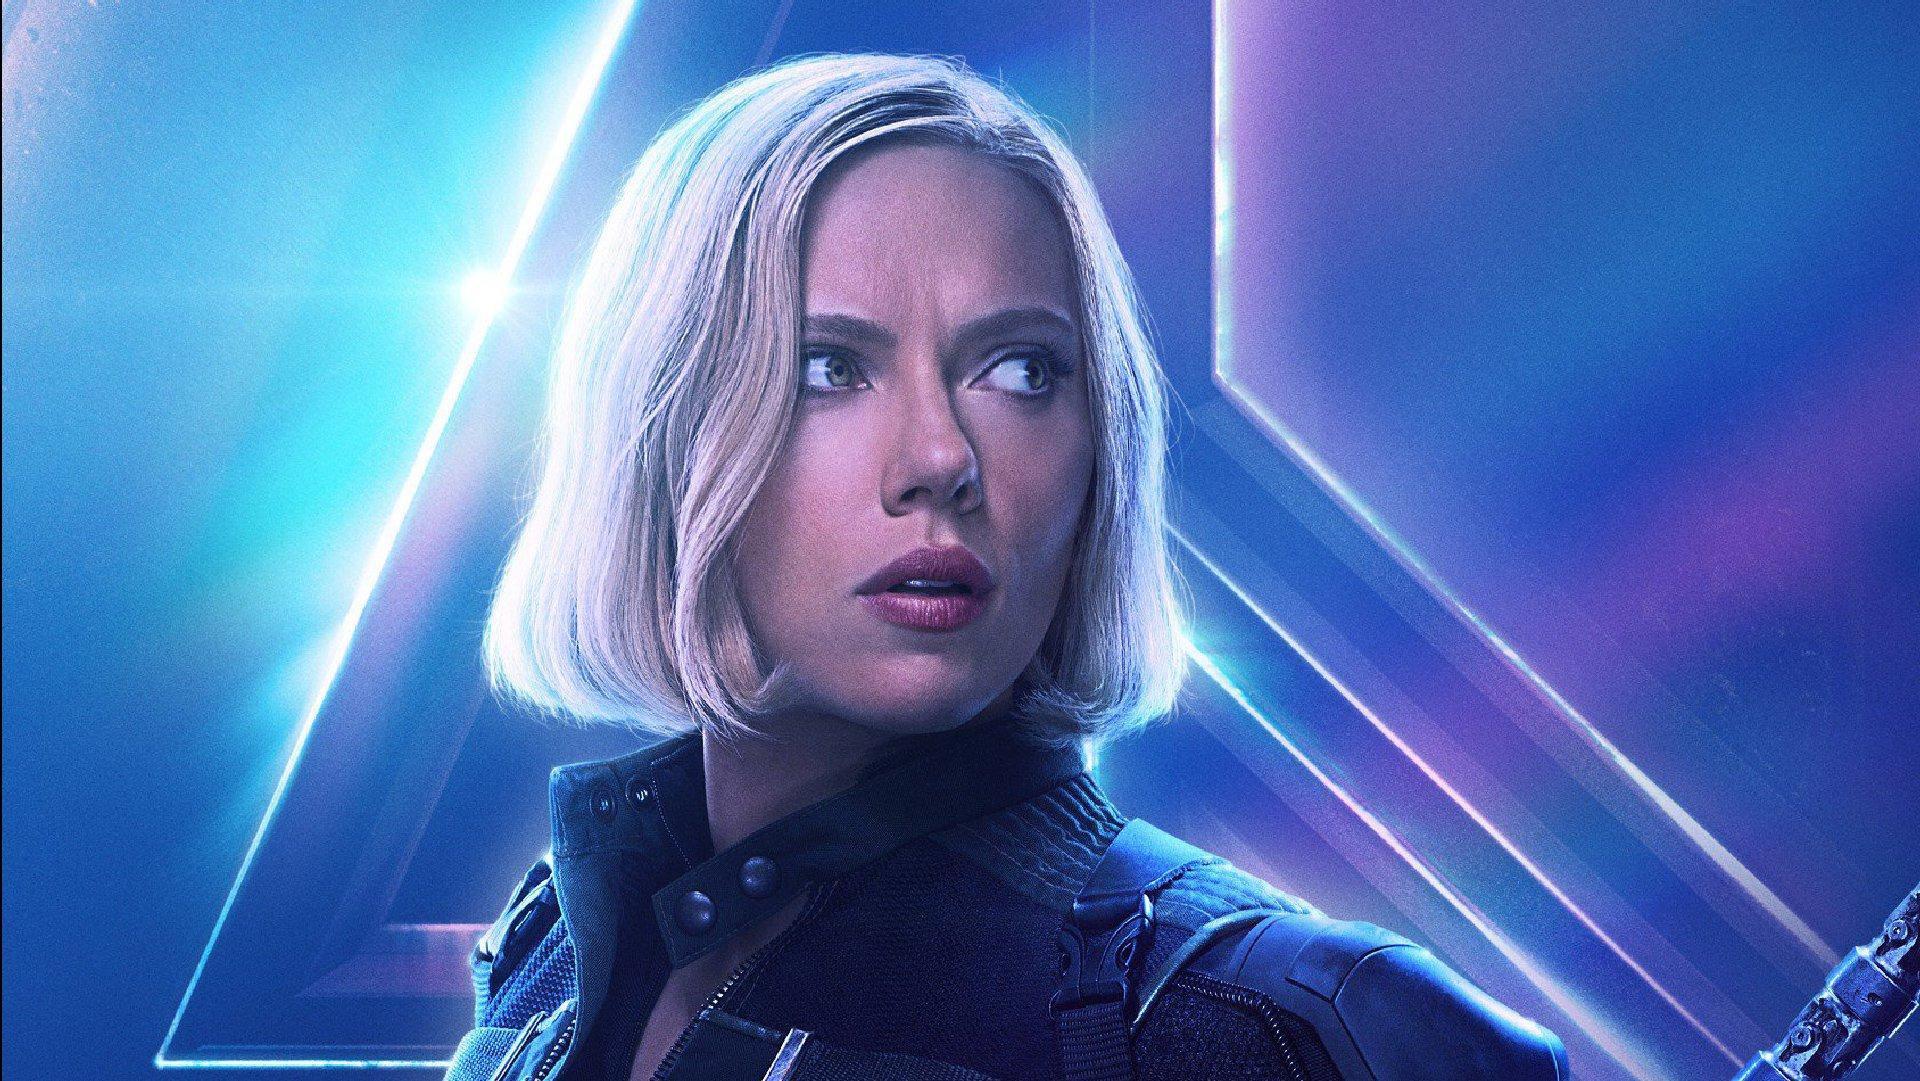 Avengers: Infinity War, Black Widow Wallpaper for Phone and HD